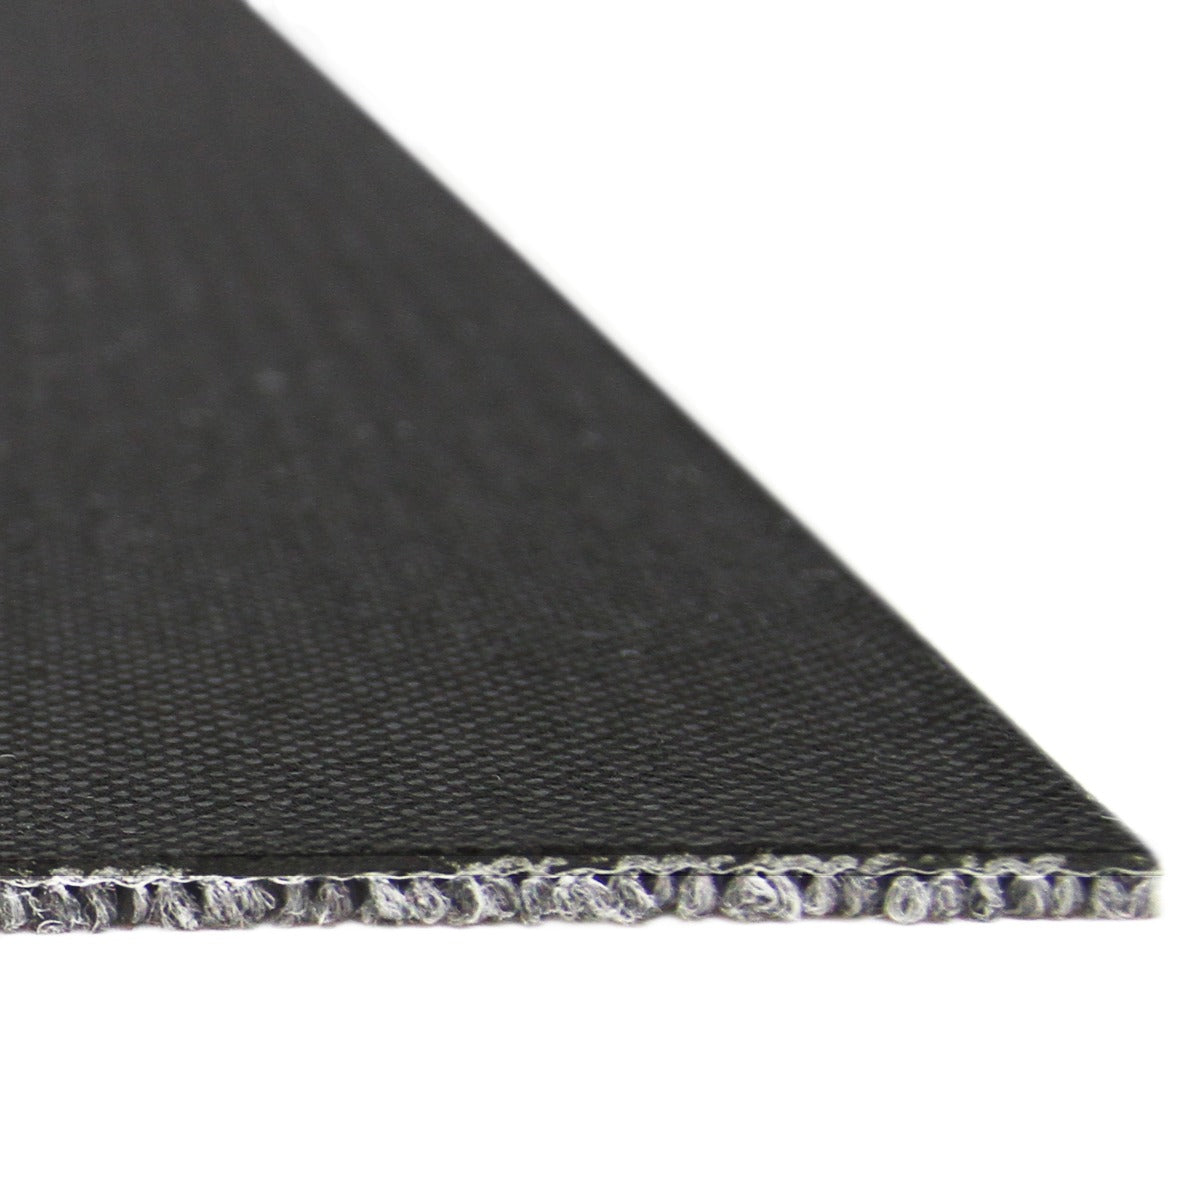 20 x Carpet Tiles 5m2 / Platinum Grey